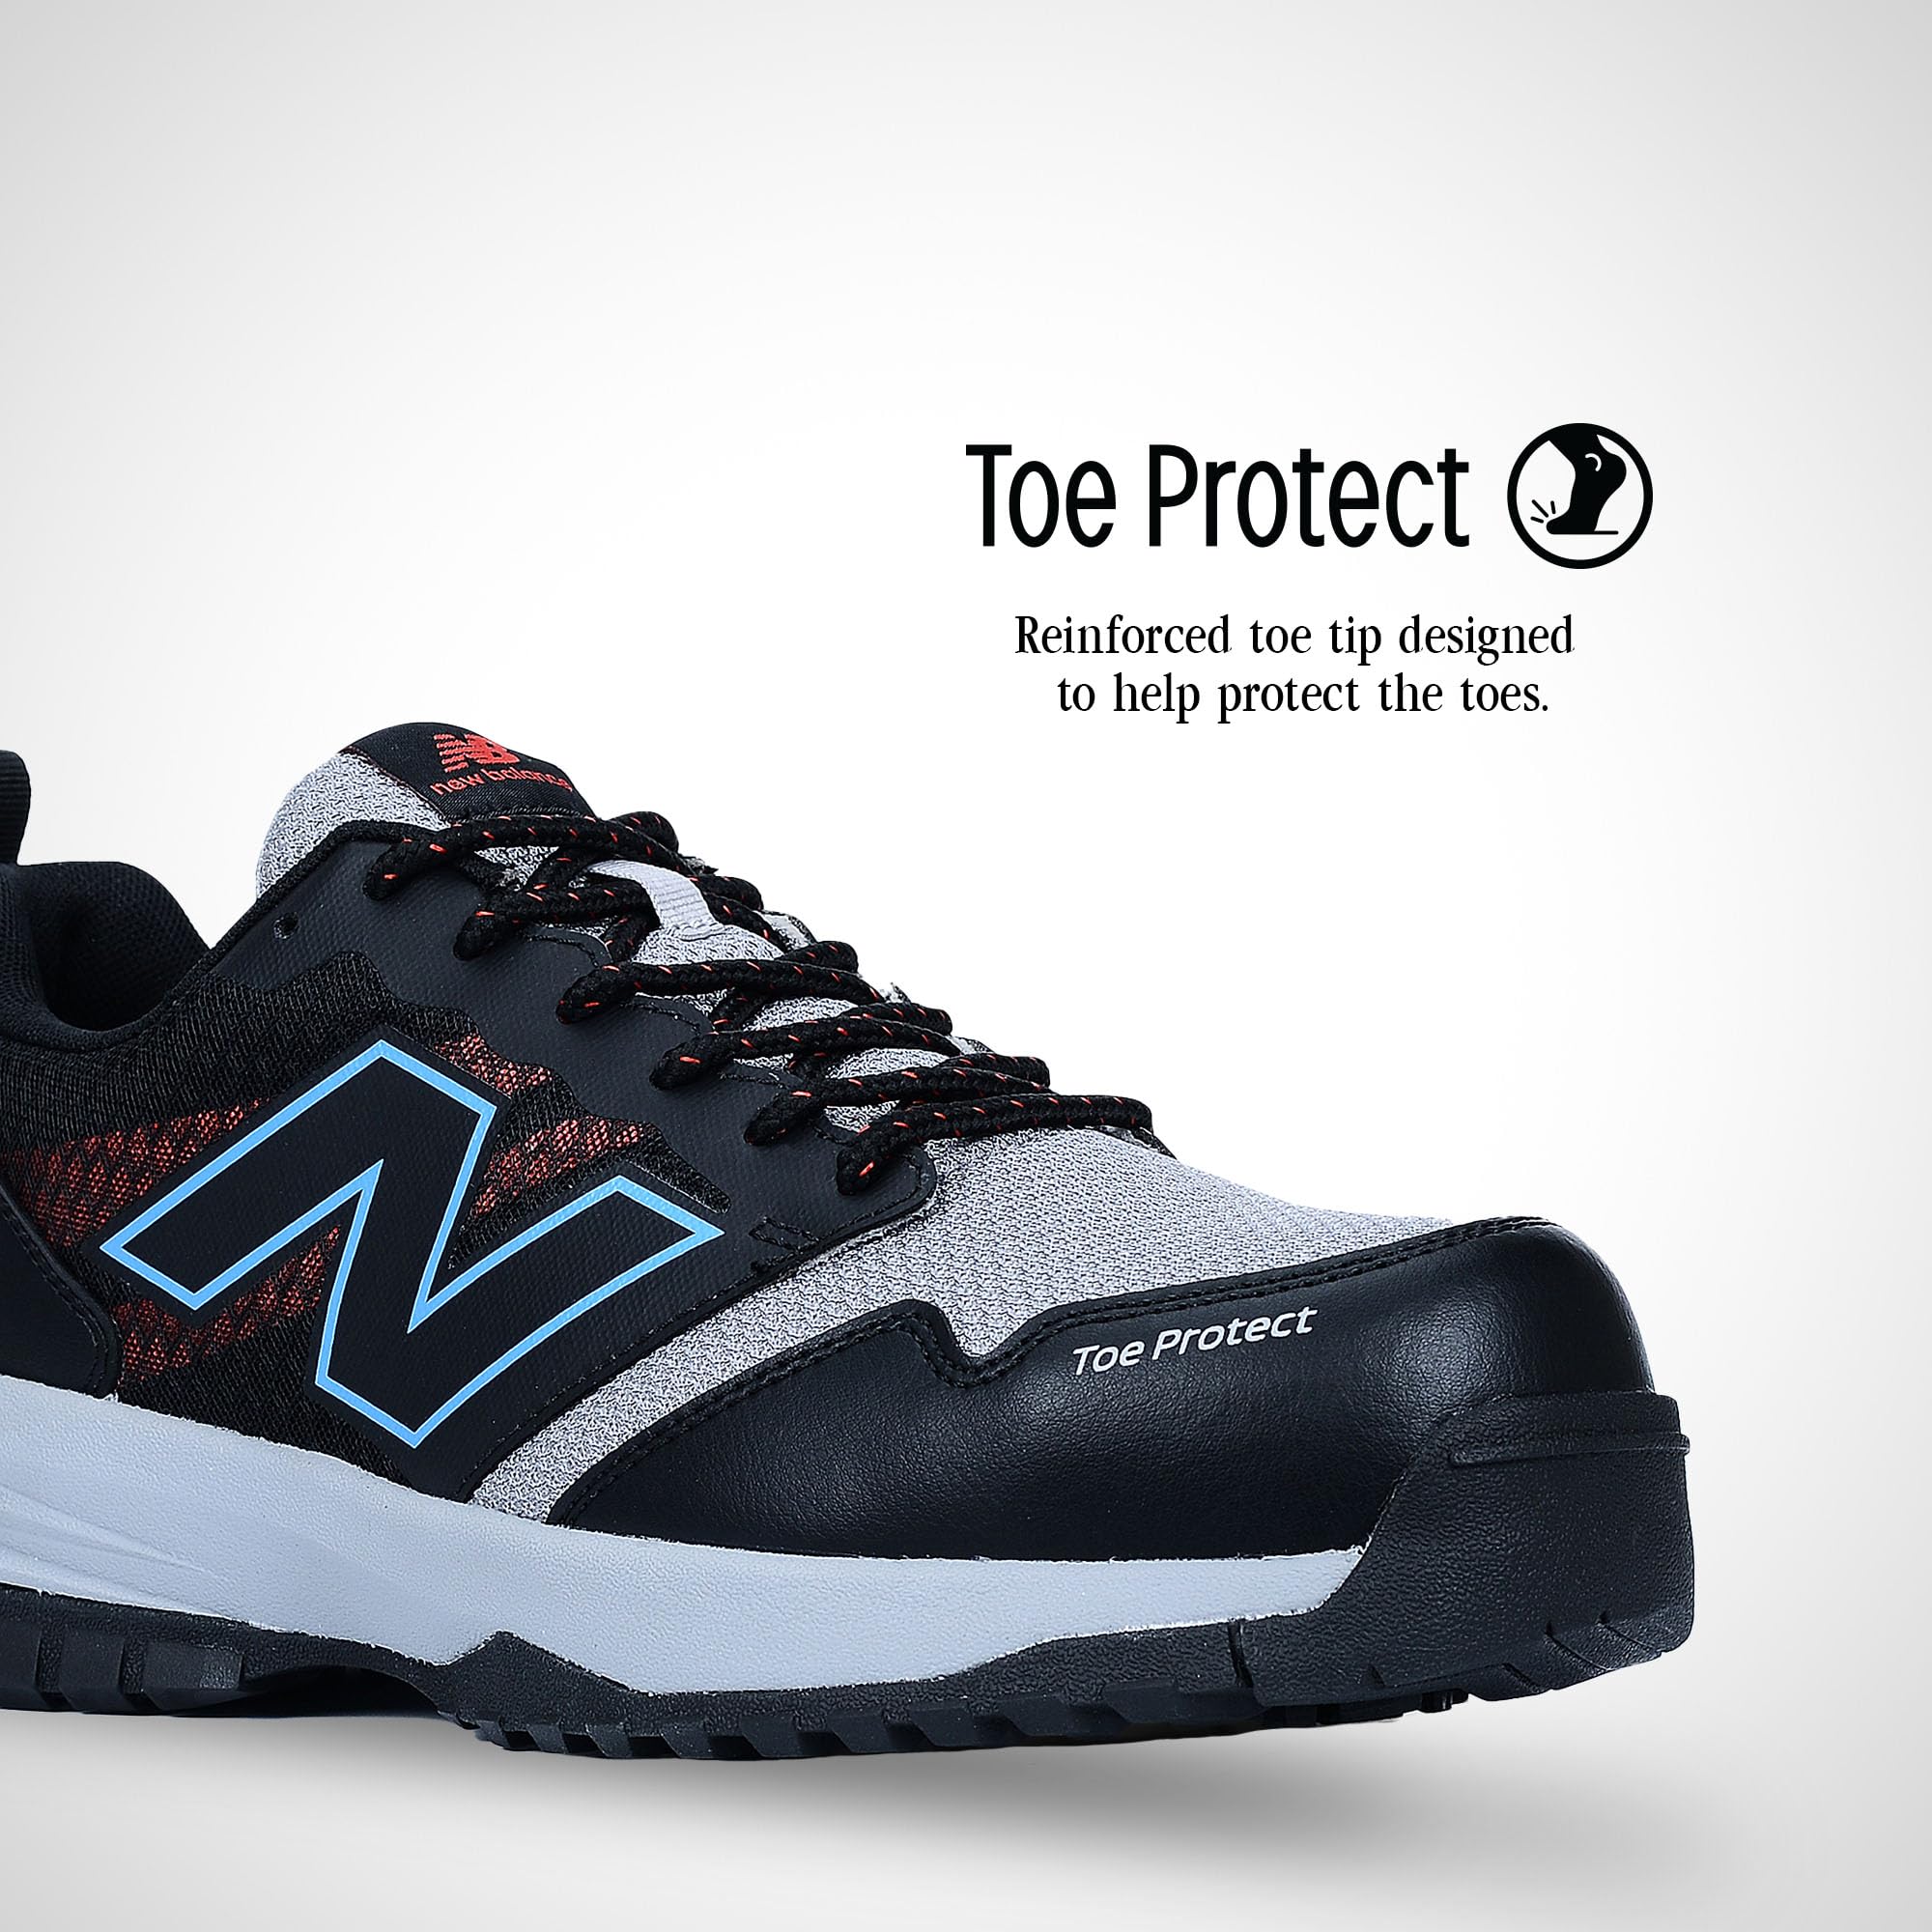 New Balance Men's Composite Toe Quikshift Industrial Shoe, Black/Blue/Red, 15 X-Wide